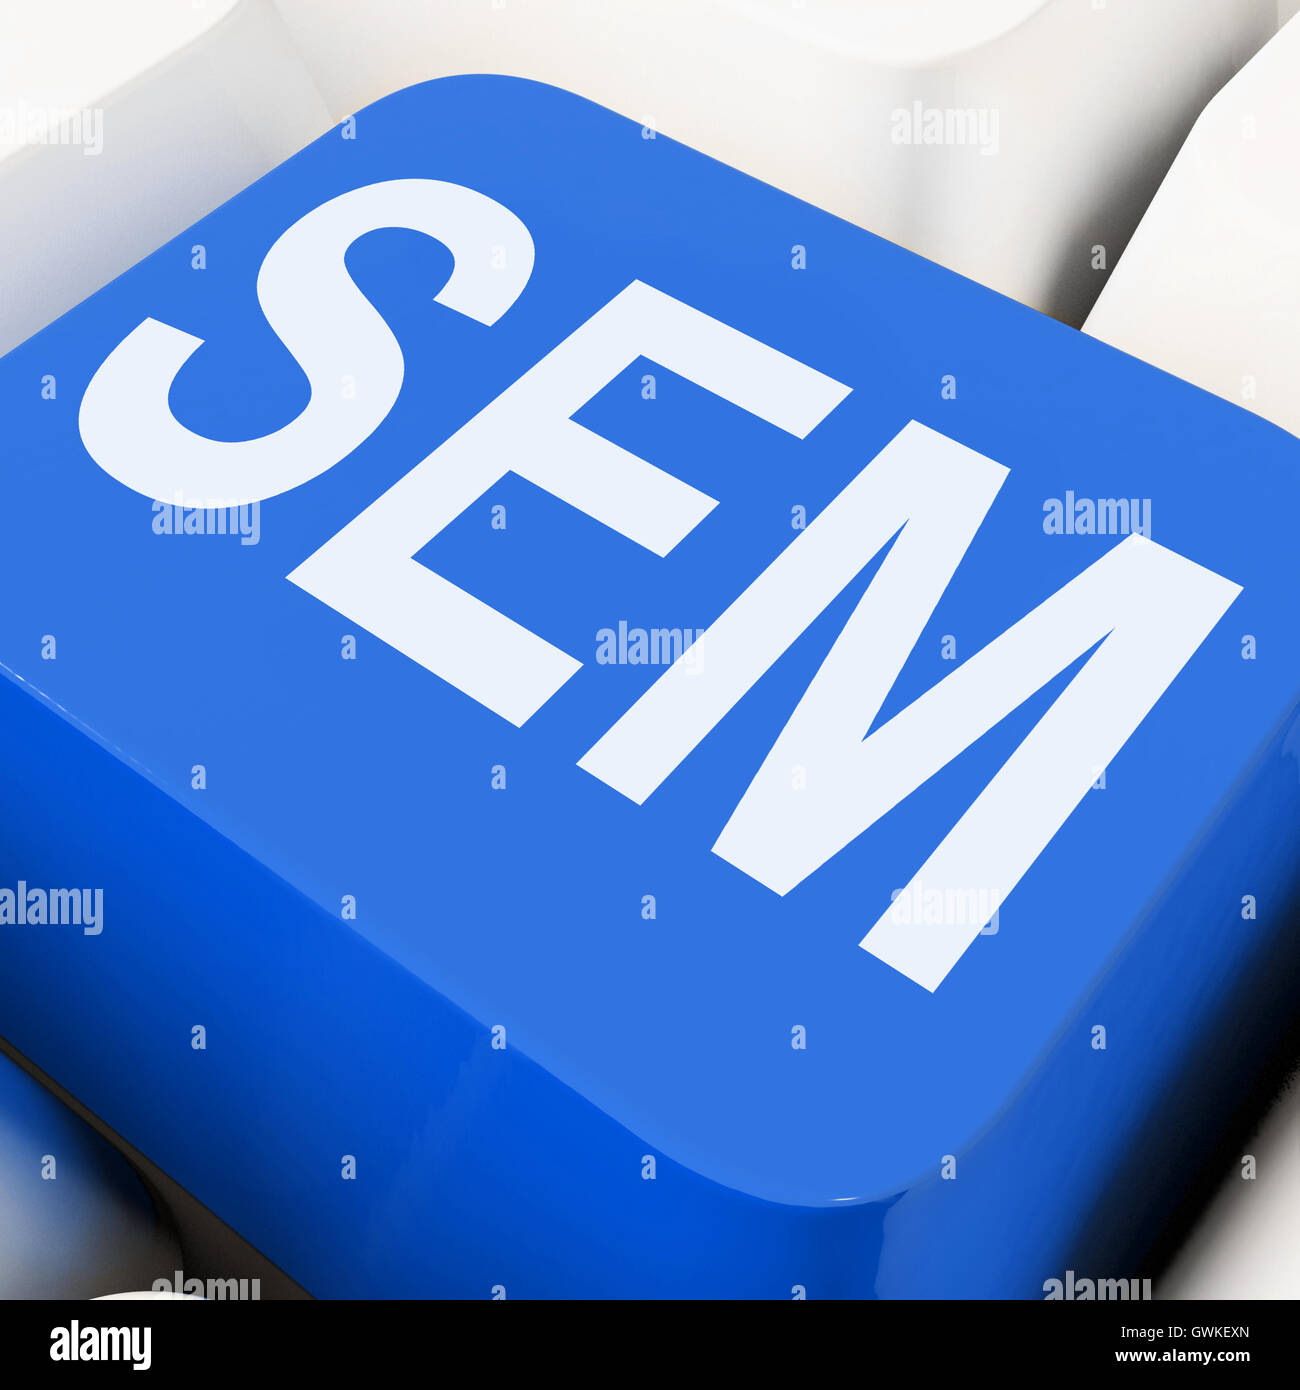 Sem Key Mean Search Engine Marketing Stock Photo